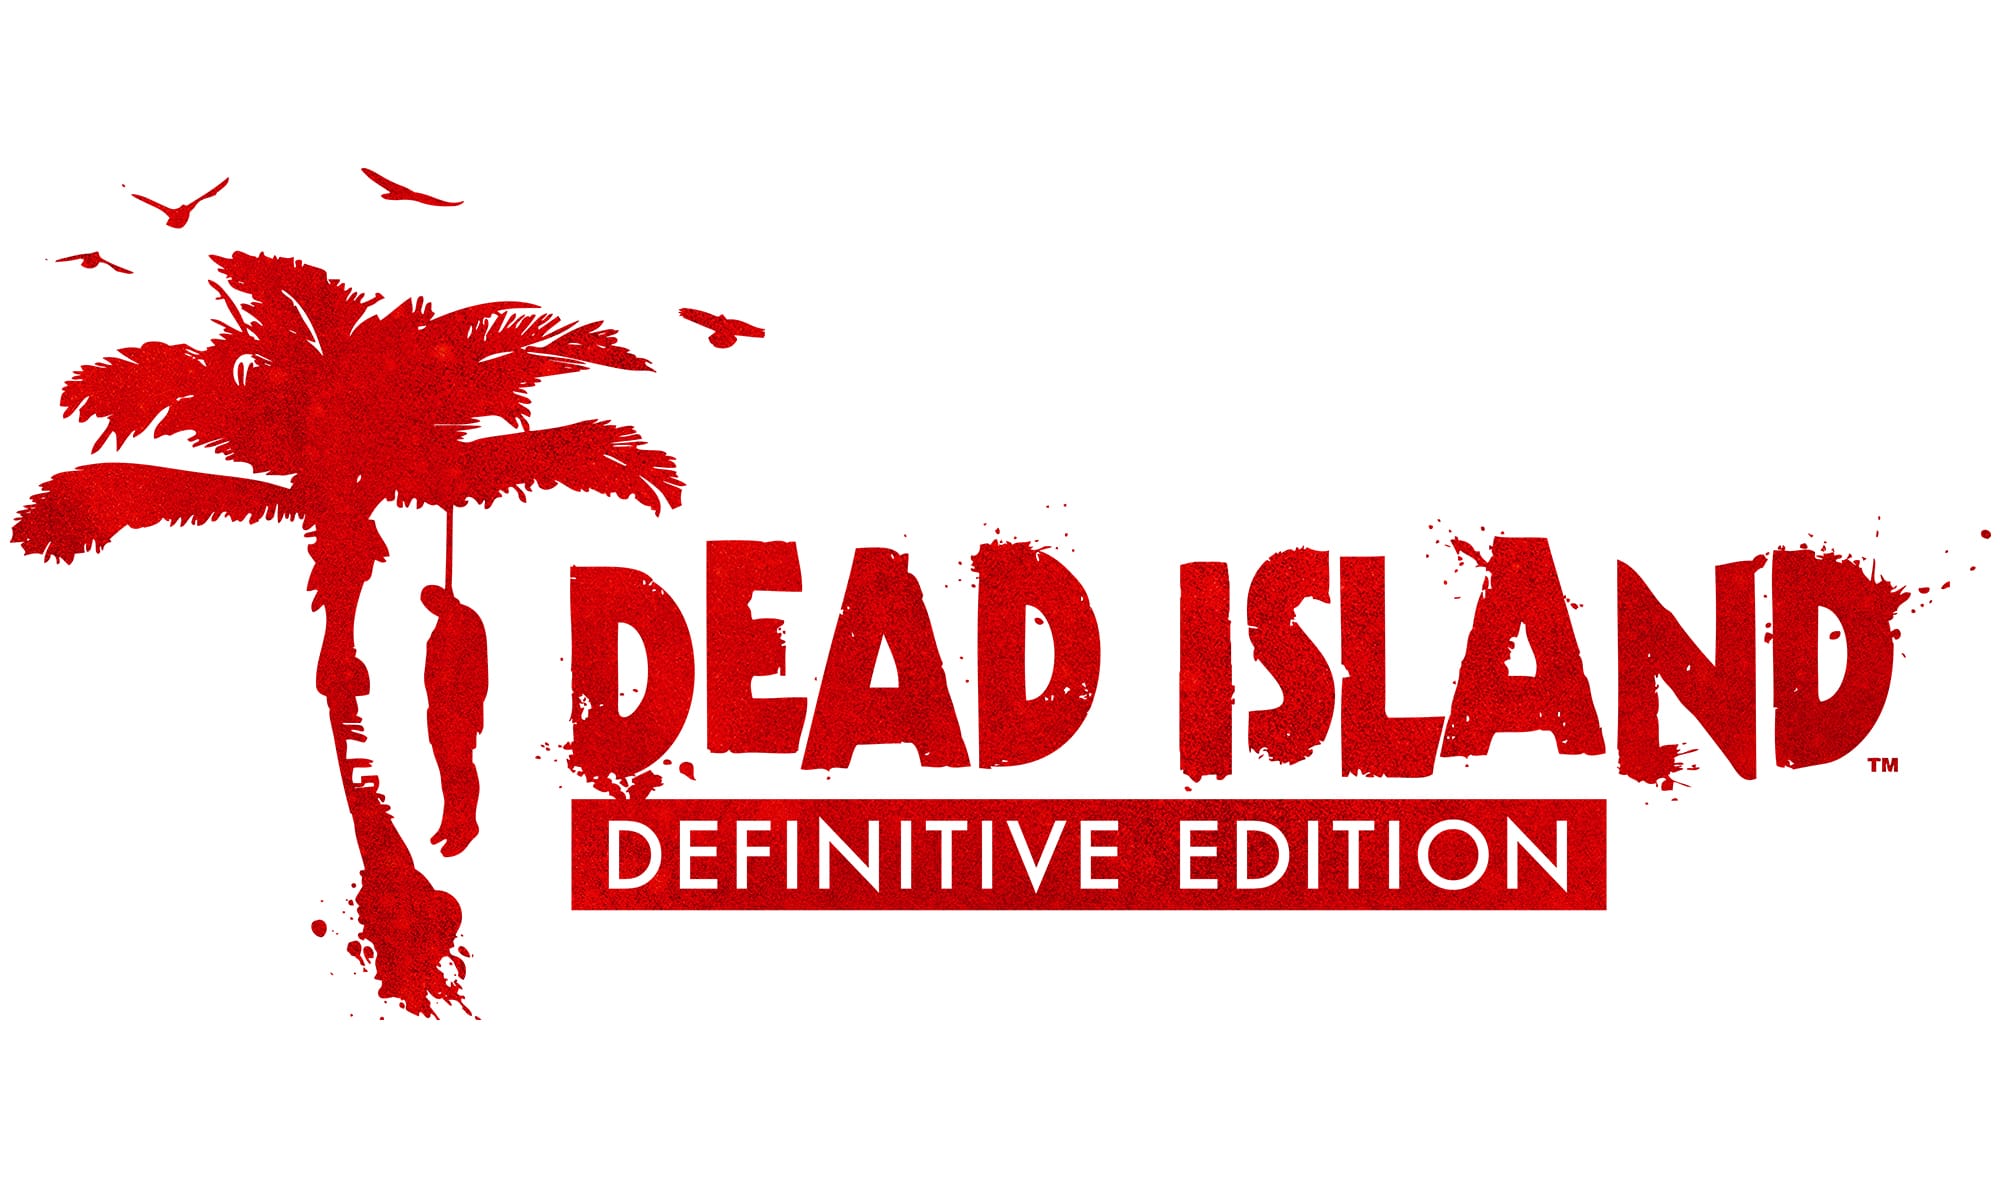 Dead island definitive edition